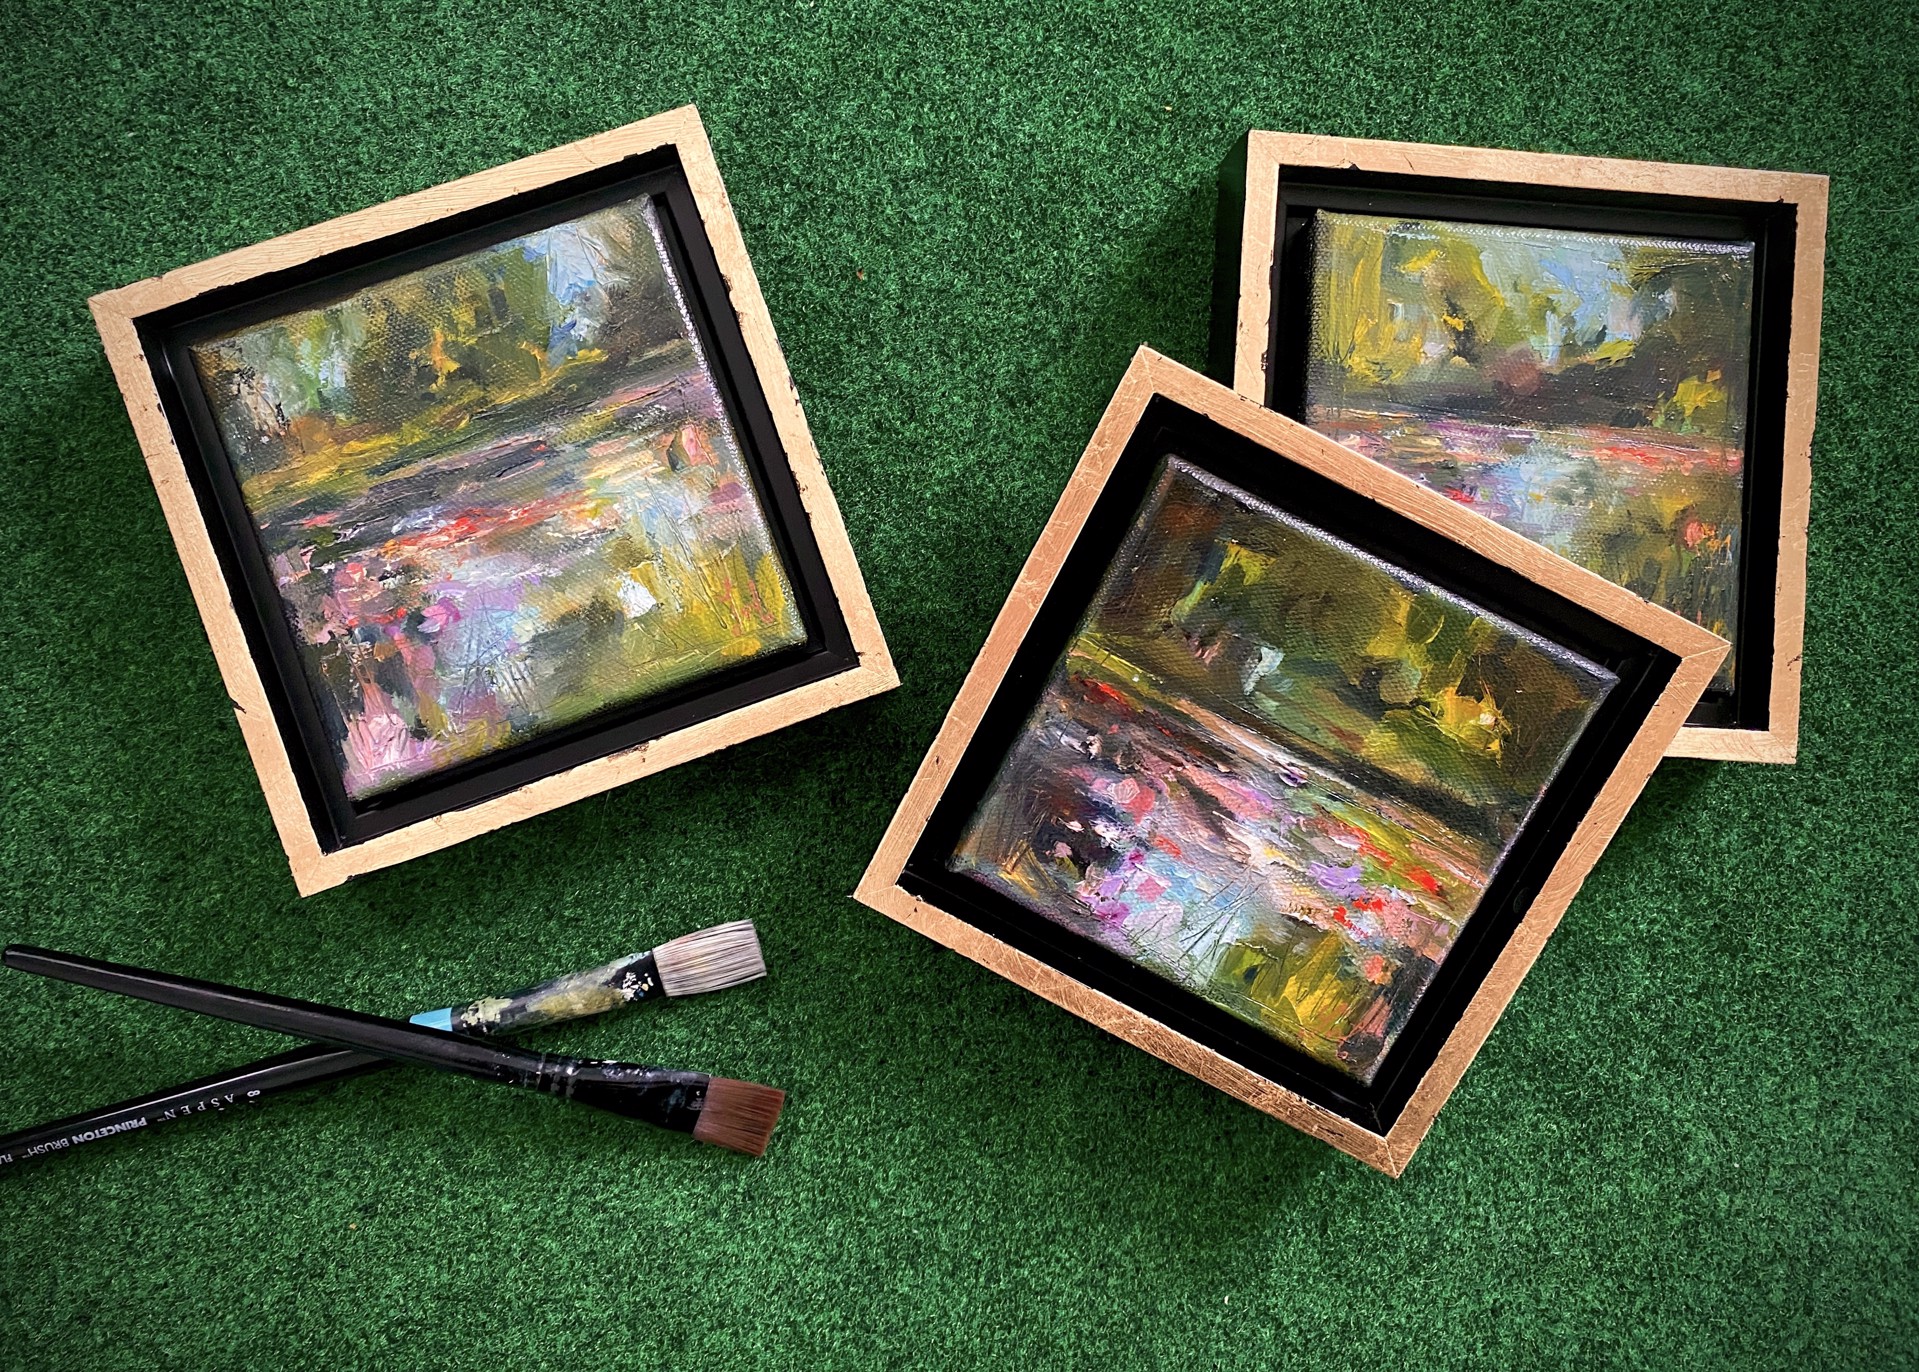 Le Jardin de Monet, I by Leigh Ann Van Fossan